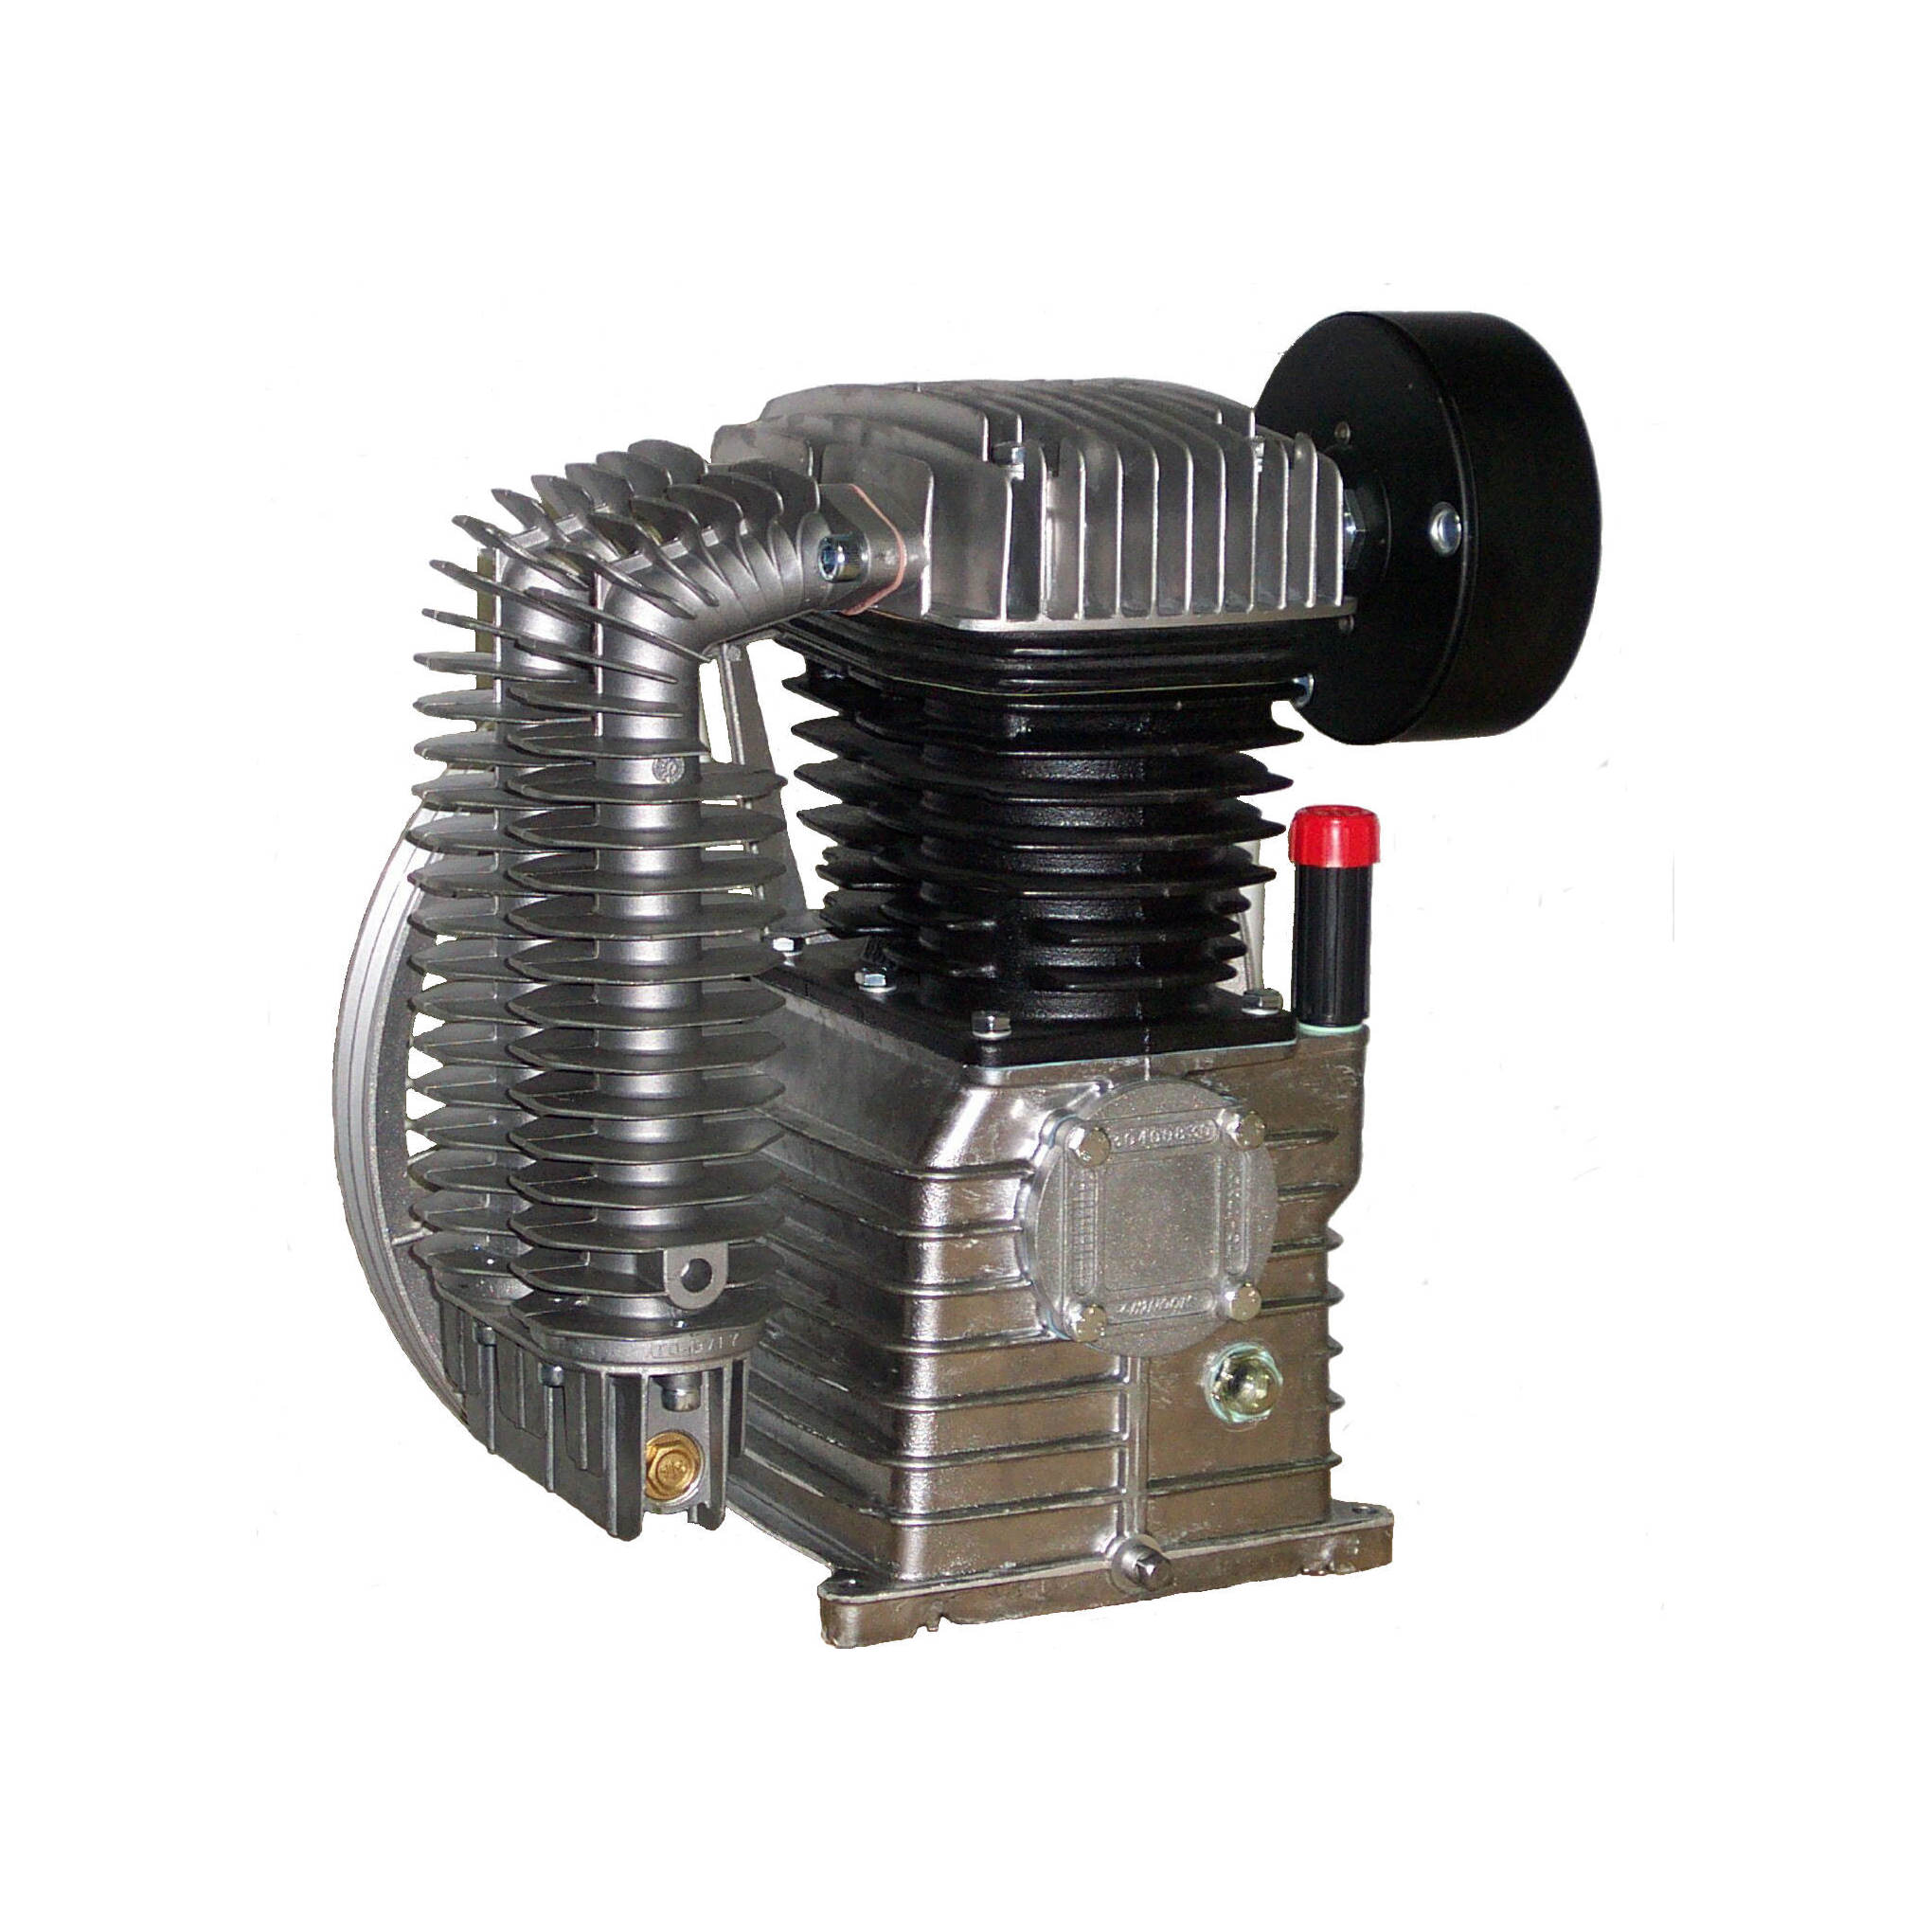 Steam air compressor фото 57